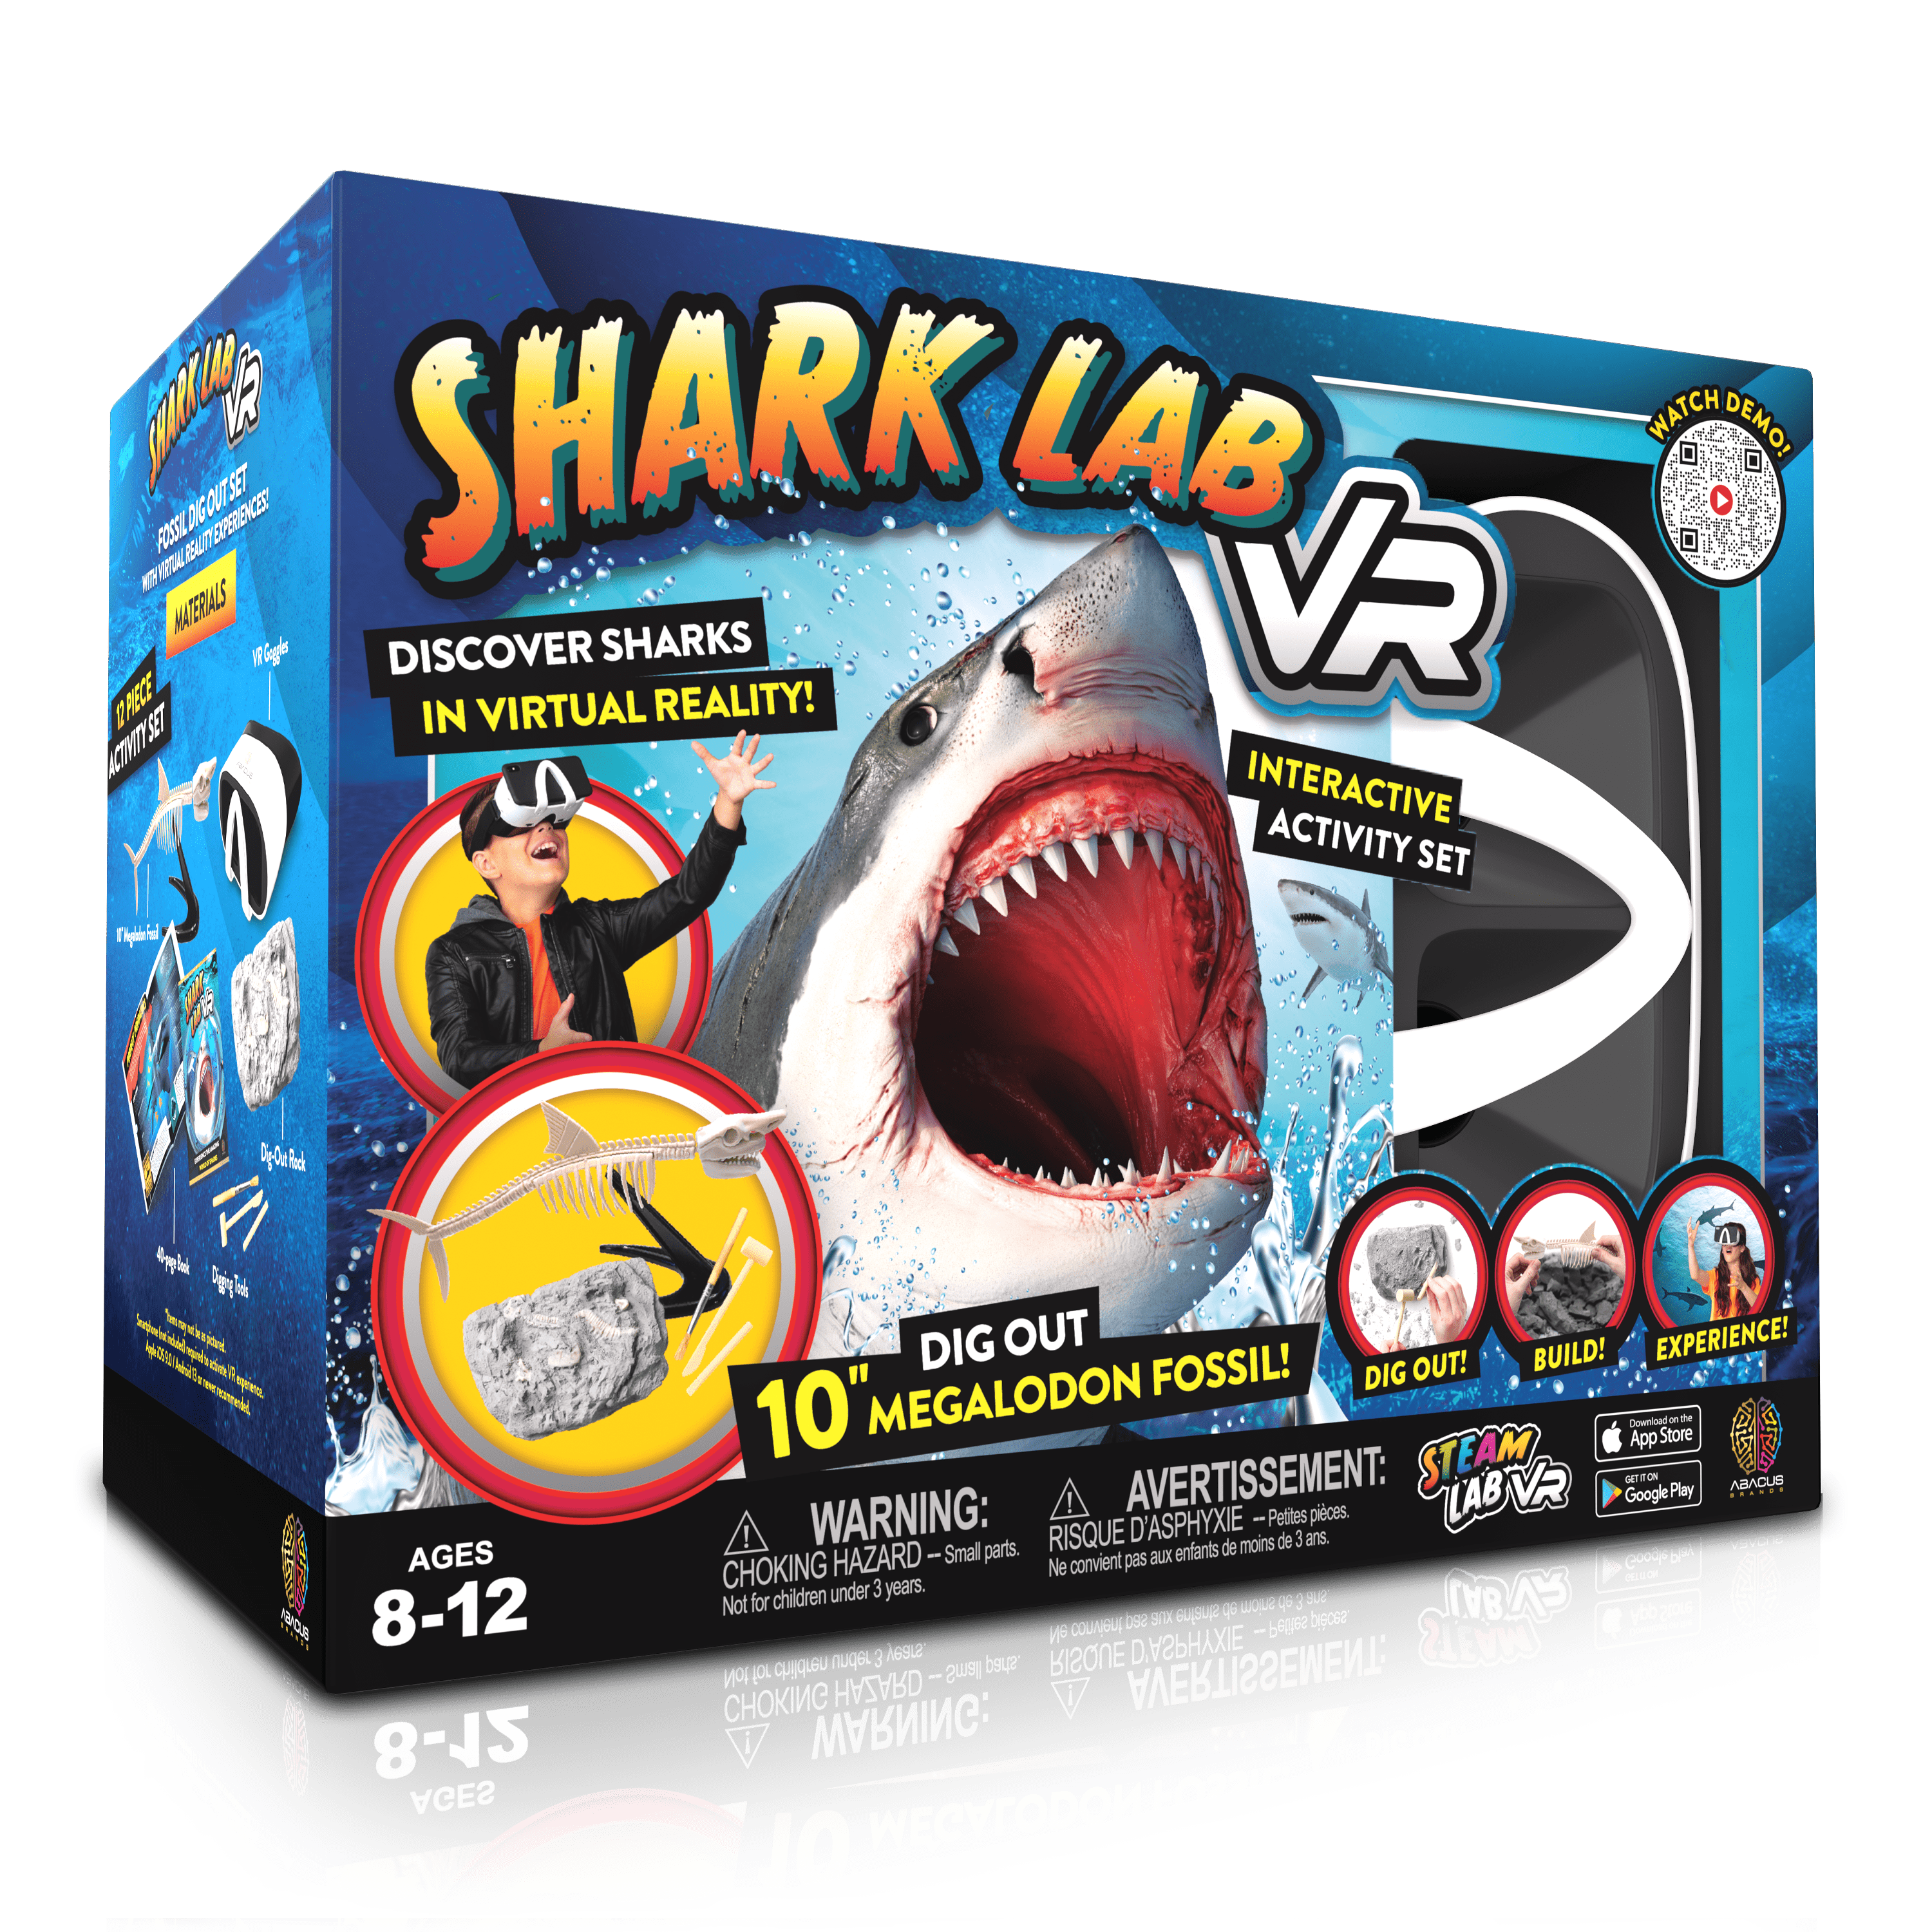 STEAM LAB VIRTUAL REALITY ACTIVITY KIT - SHARK LAB VR